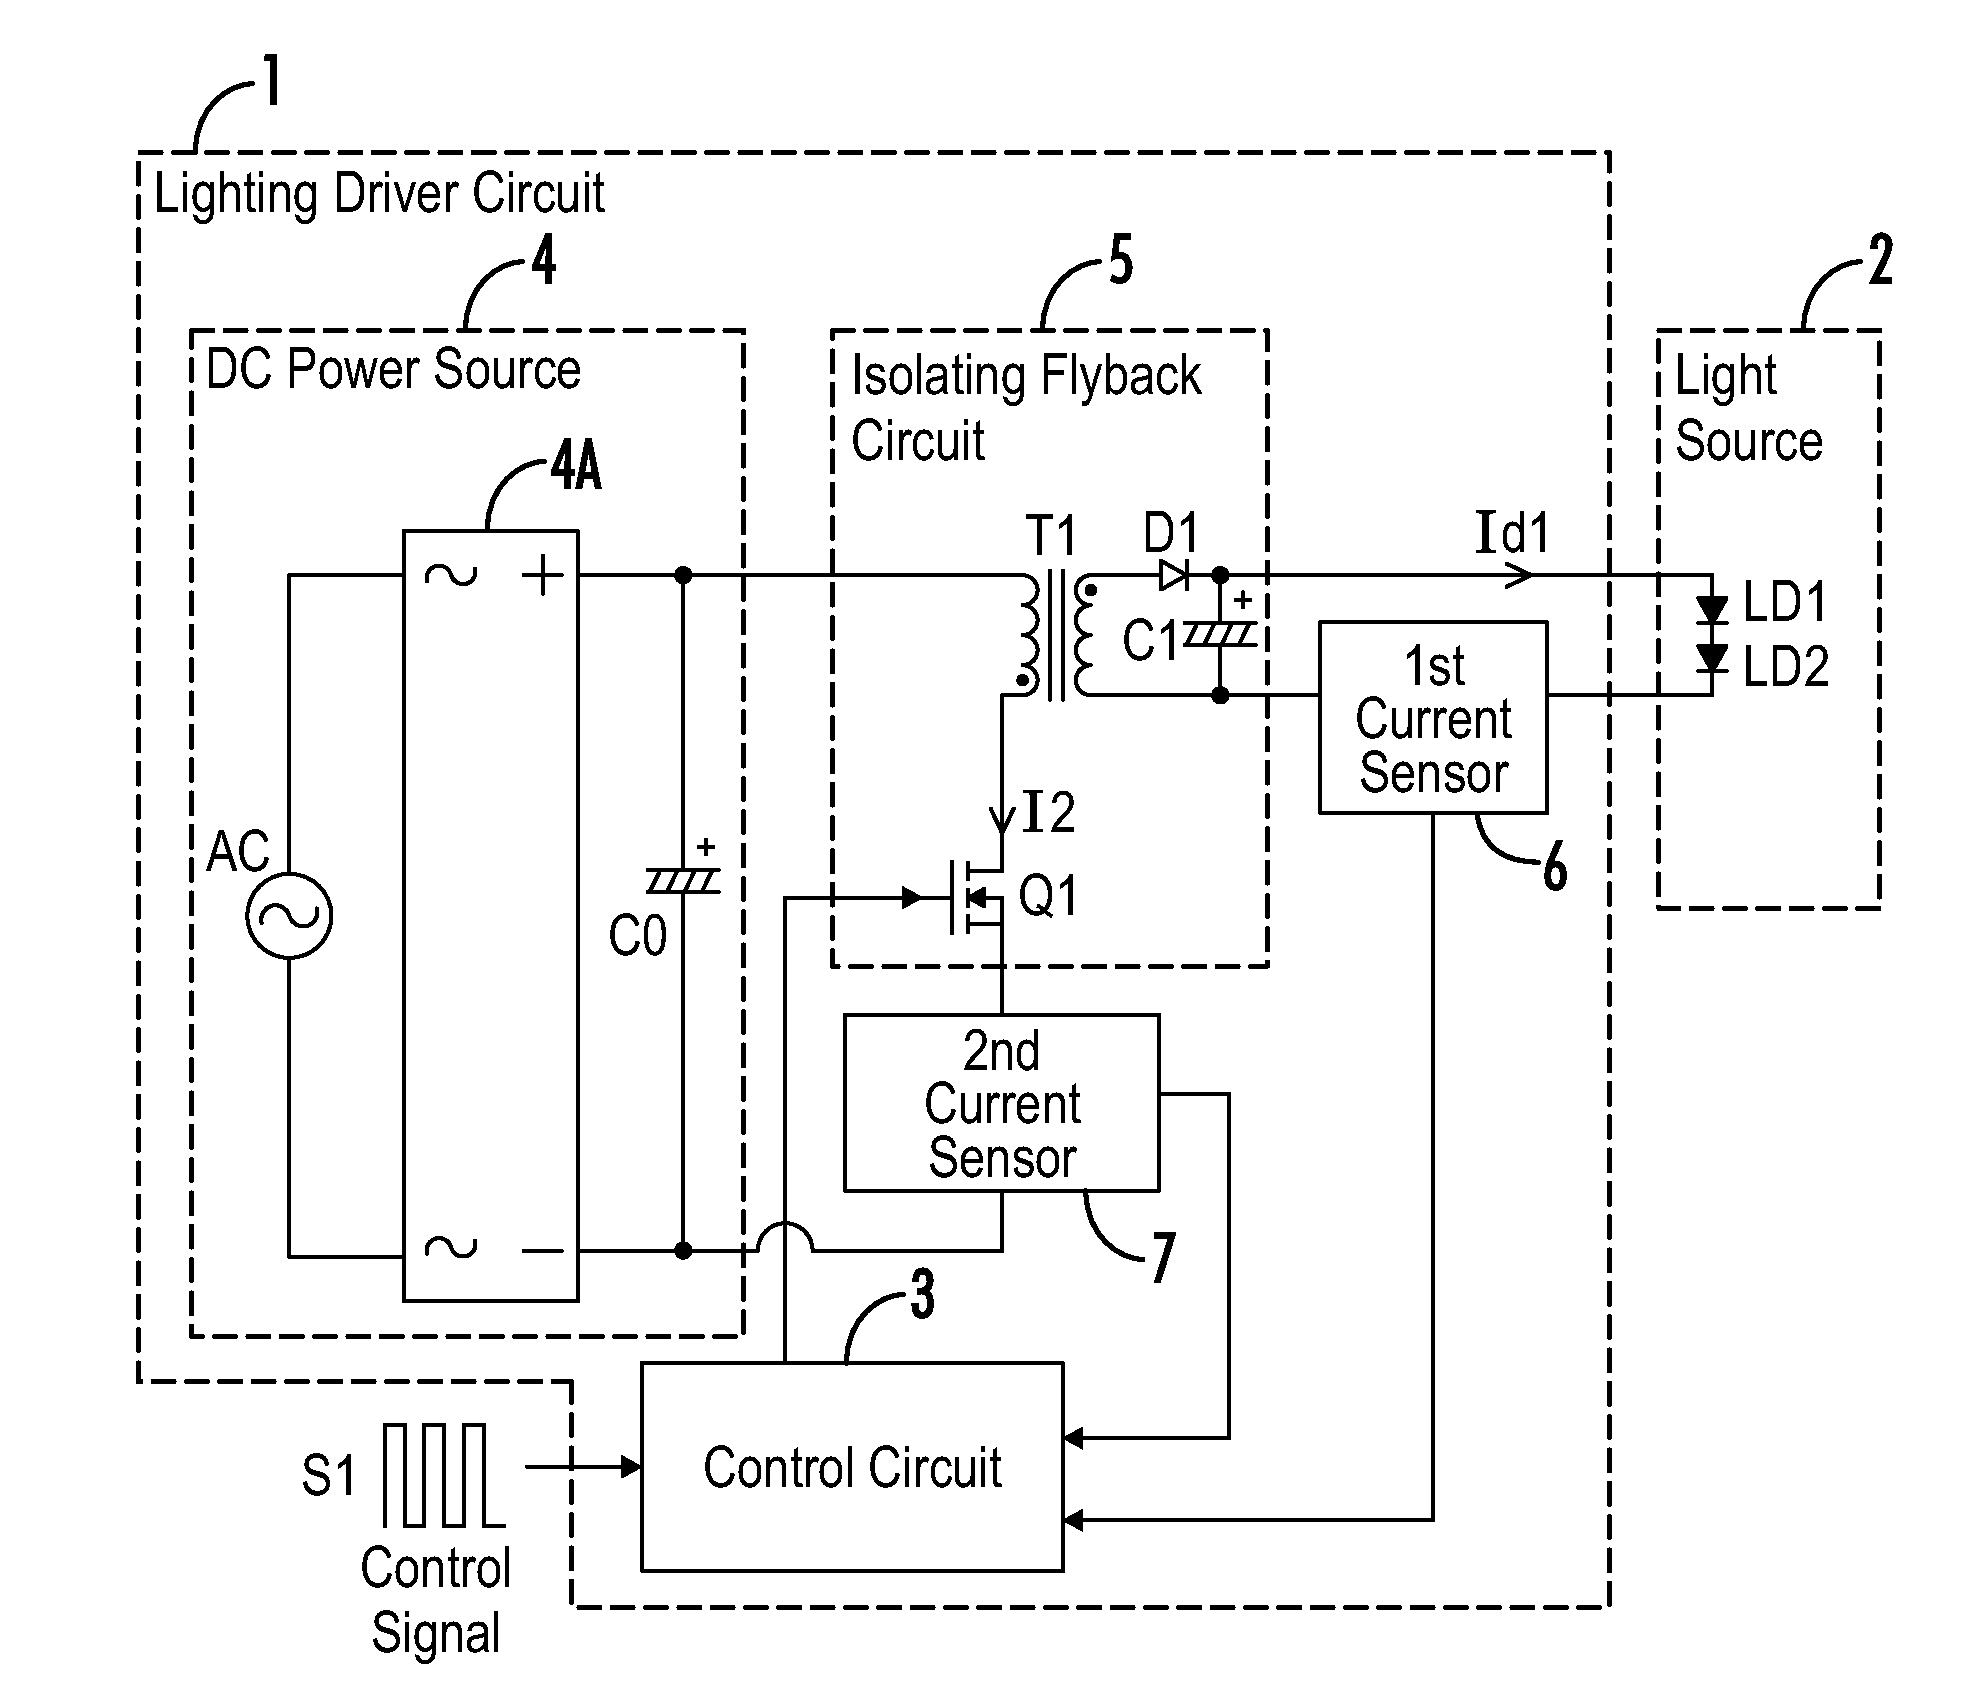 Lighting driver circuit and light fixture